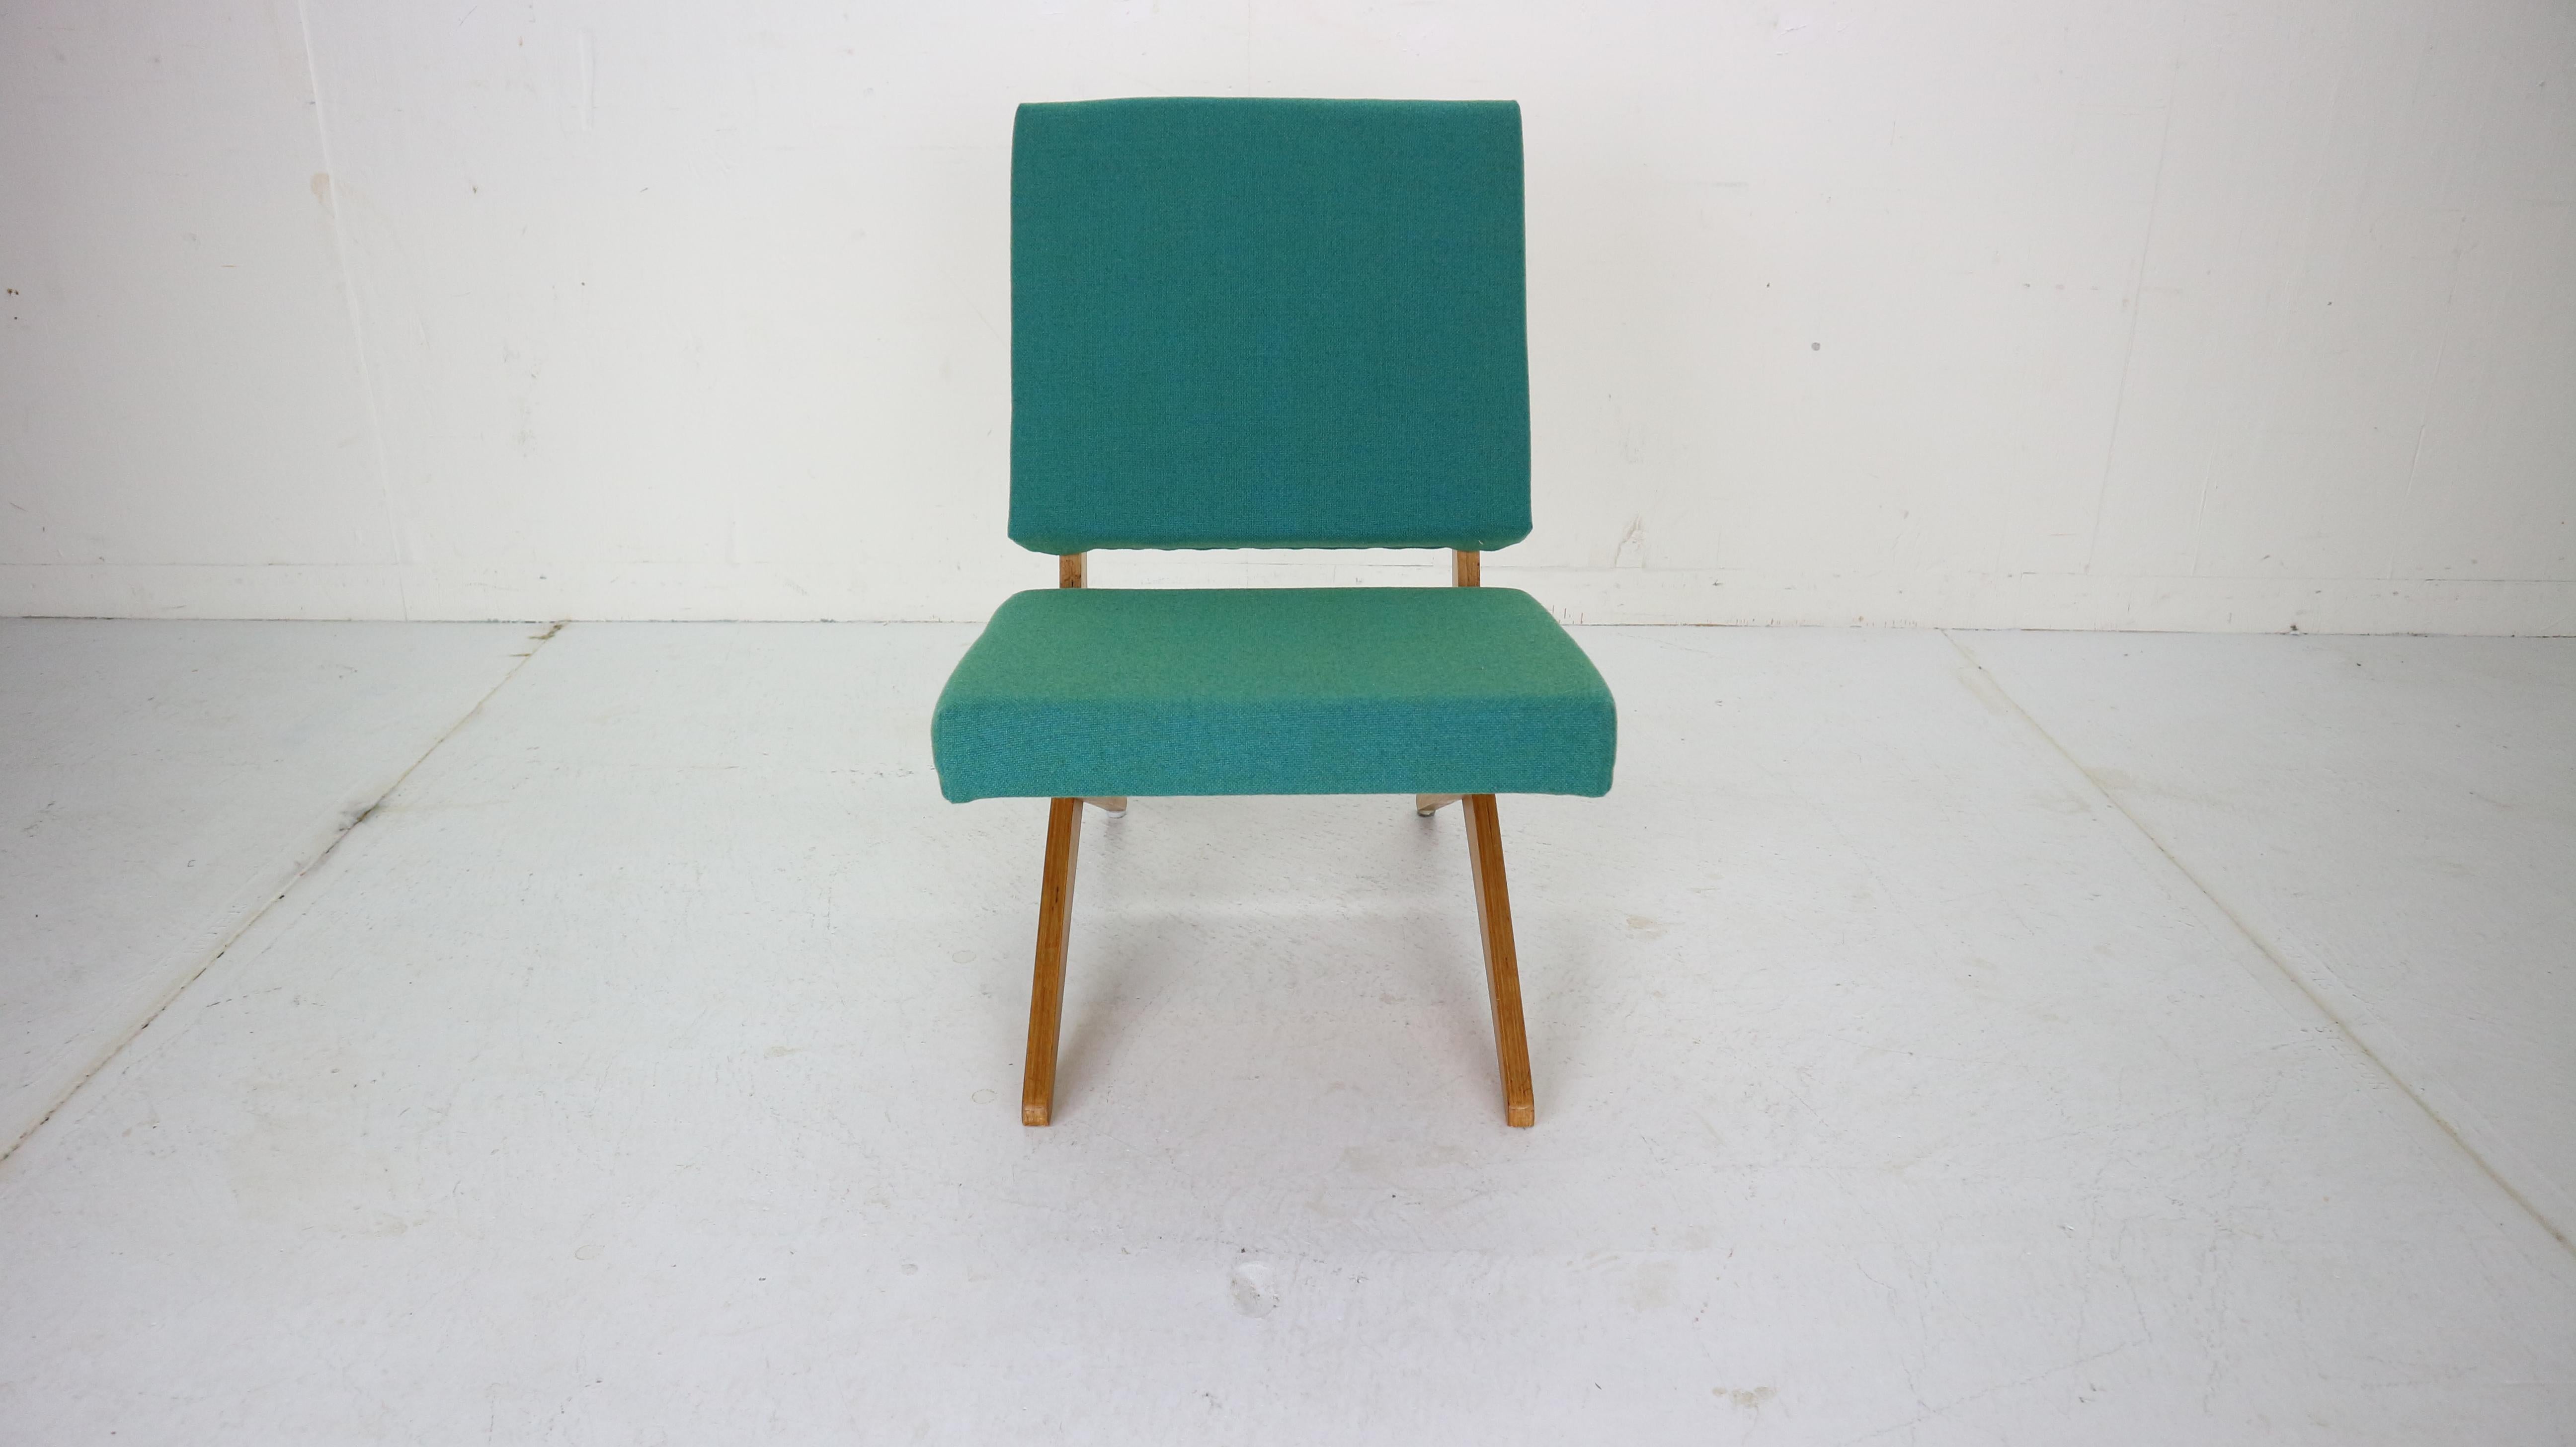 Rare modernist low-sitting 'Scissor' chair designed by architect Jan van Grunsven in 1959 and produced by UMS/Pastoe (famous Dutch designed furniture manufactur), Utrecht, Netherlands. Van Grunsven worked at the architect studio Gerrit Rietveld